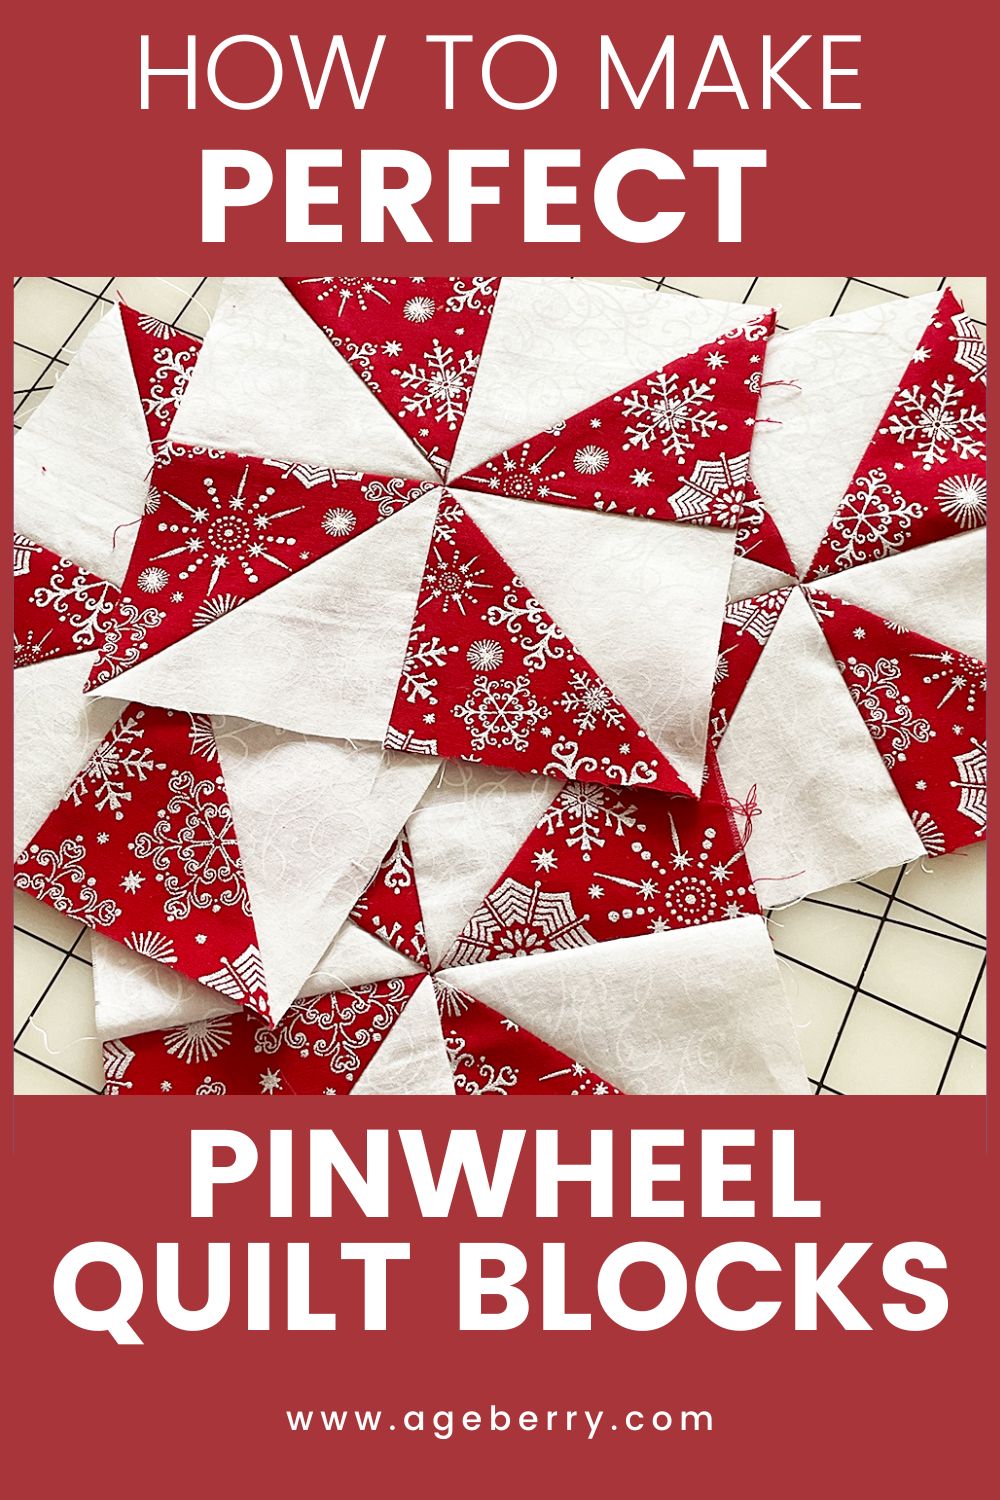 How To Make Perfect Pinwheel Quilt Blocks